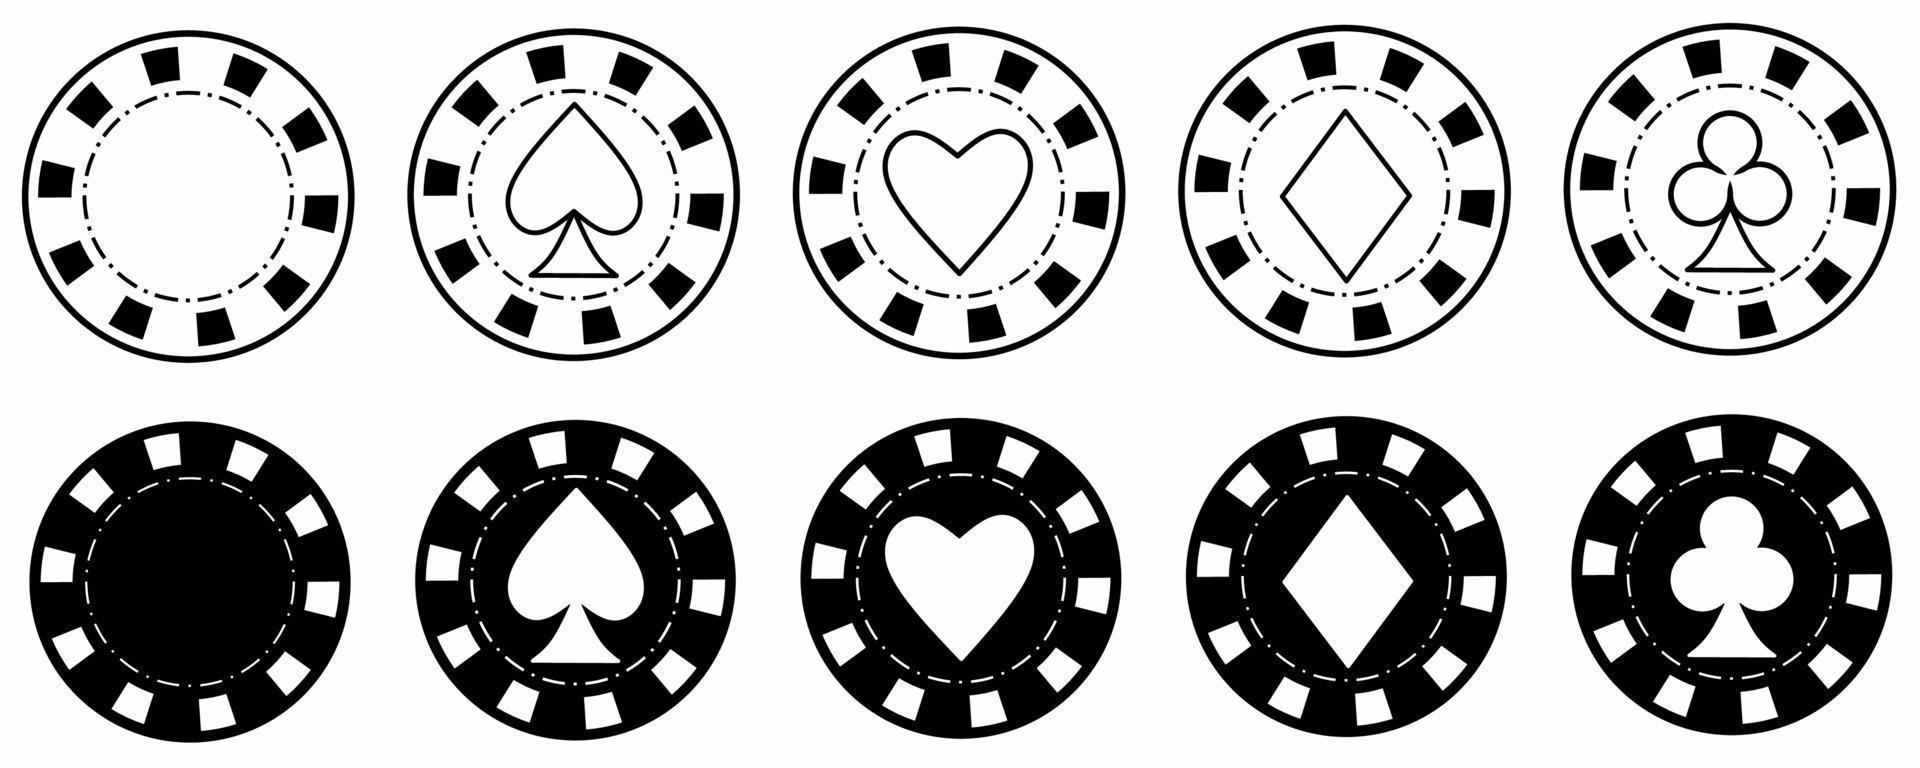 Esquema silueta fichas de póquer conjunto de iconos aislado sobre fondo blanco. vector